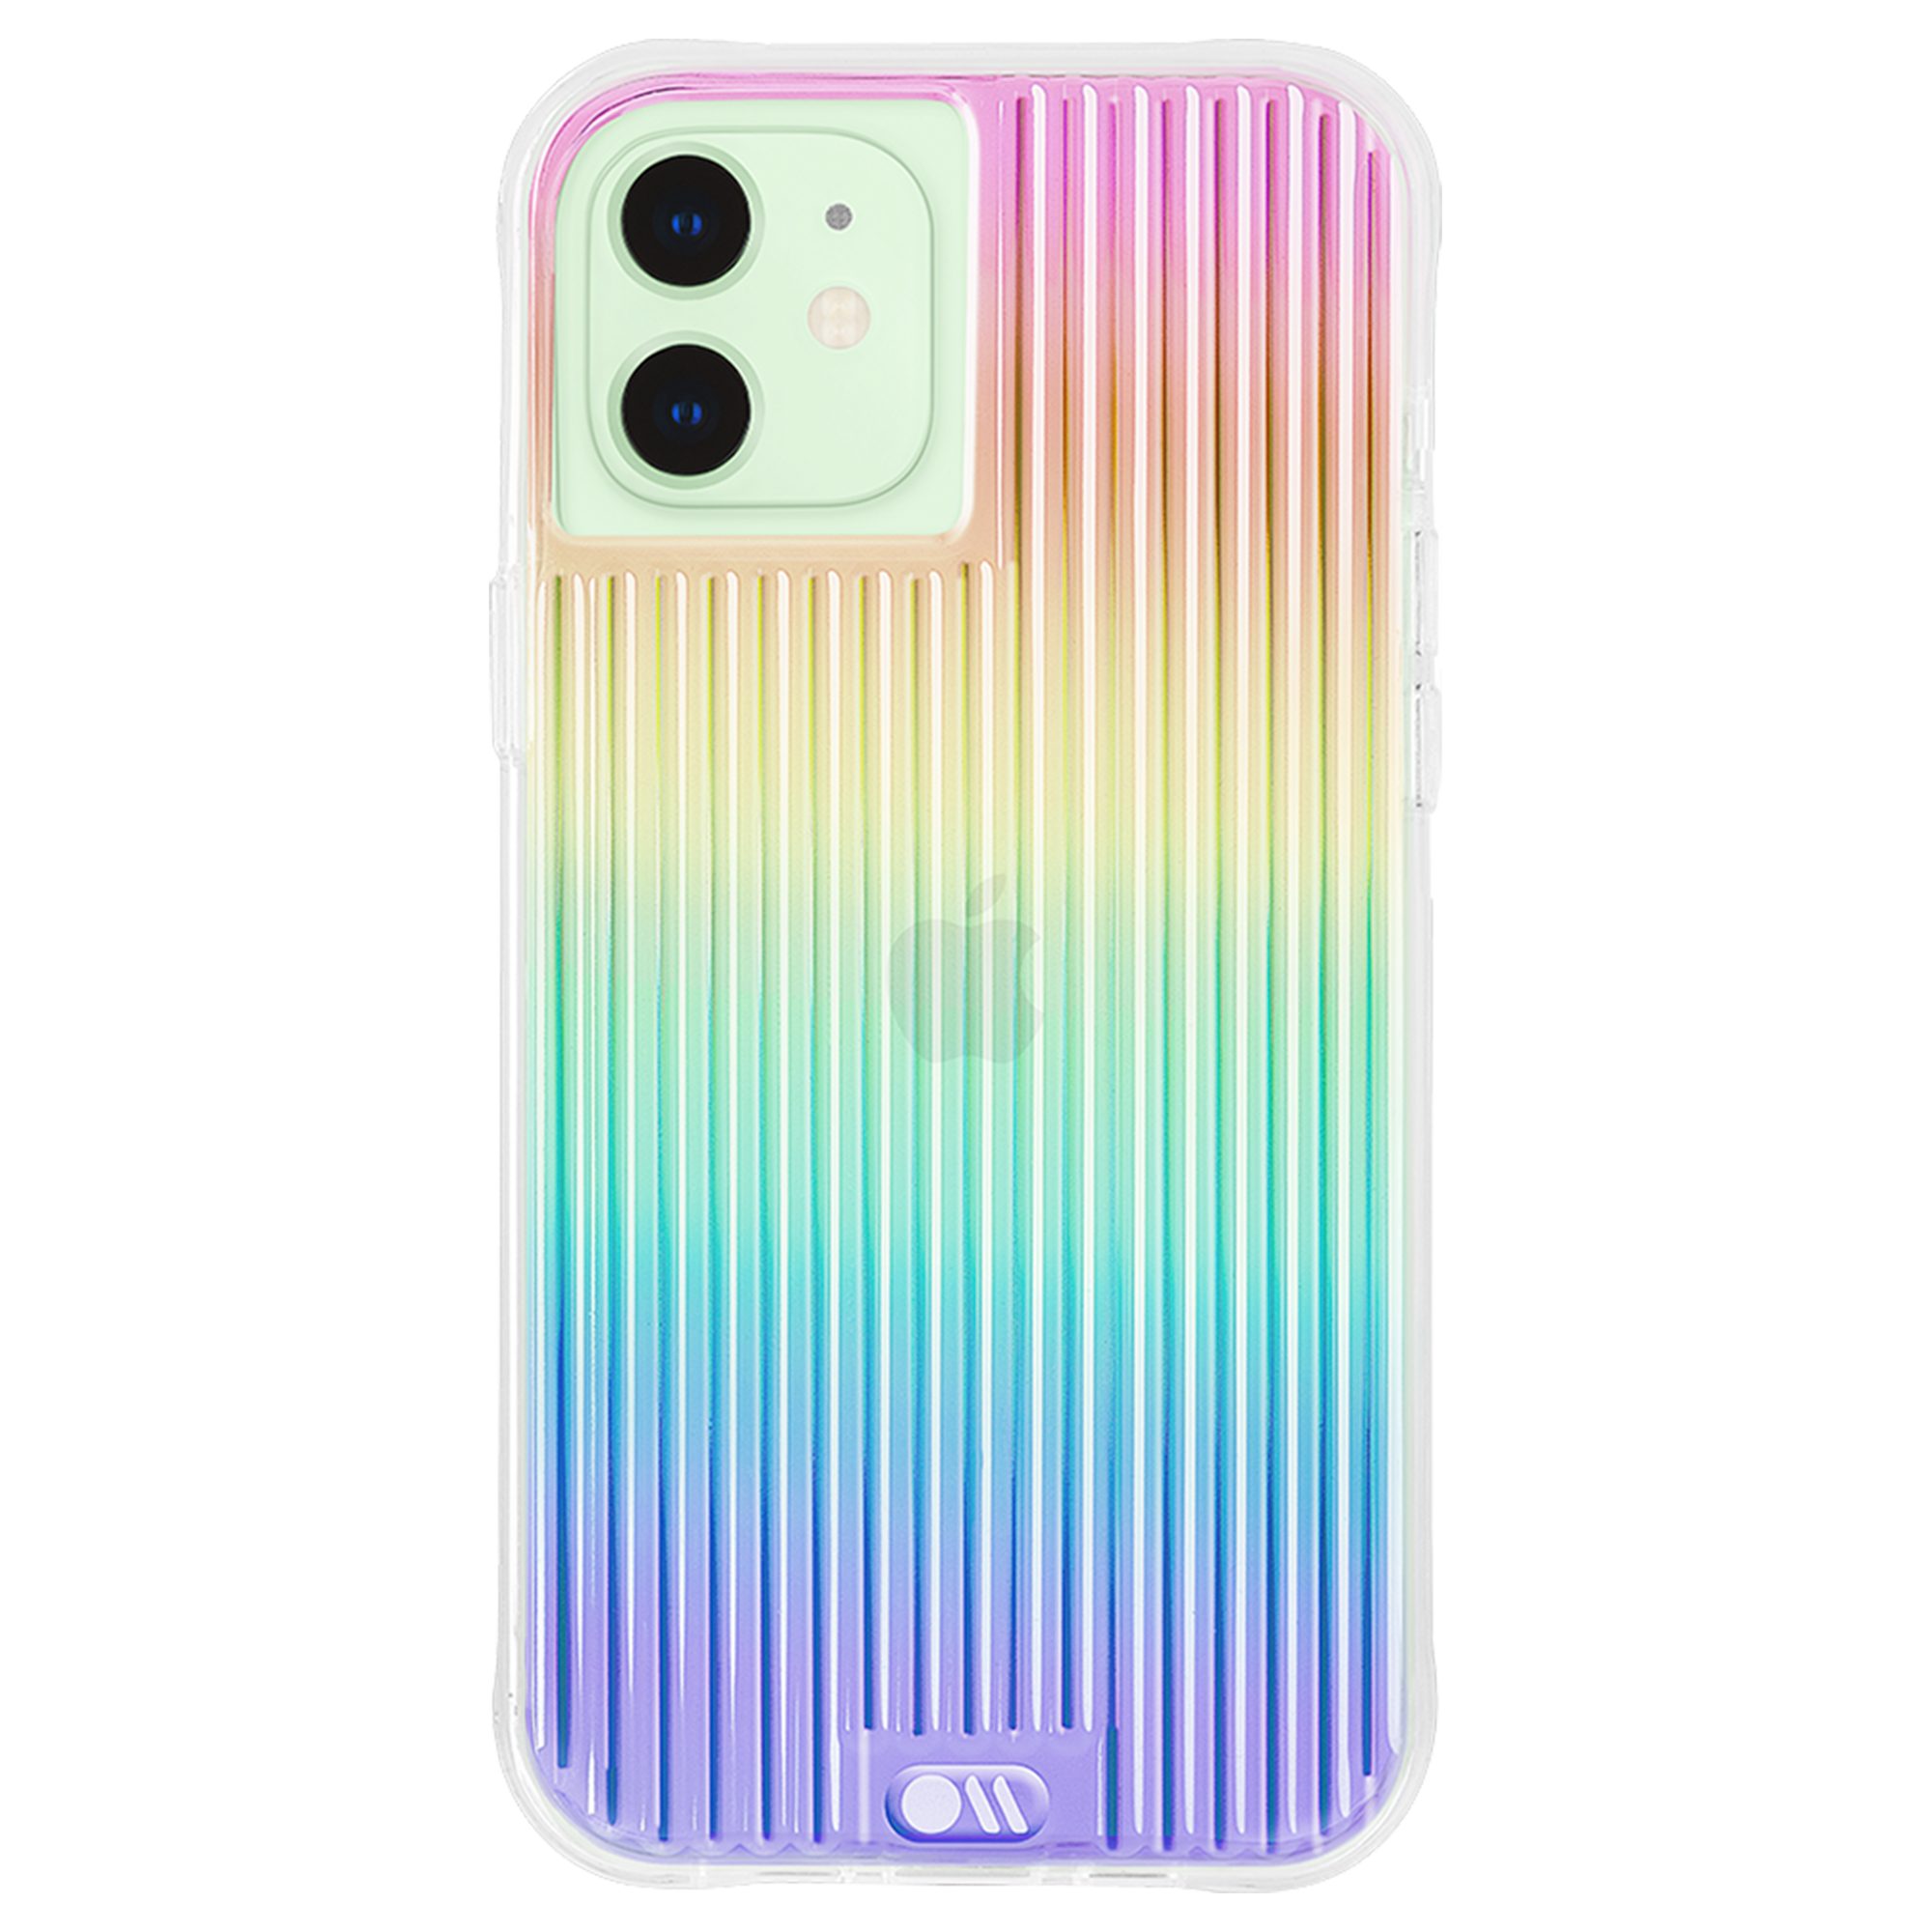 Case-Mate Handyhülle »Tough Groove« iPhone 12 mini 13,7 cm (5,4 Zoll),  [Apple iPhone 12 mini Hülle, durchsichtig, glänzend, Antimikrobielle  Beschichtung, Fallschutz] - Regenbogen / Transparent online kaufen | OTTO